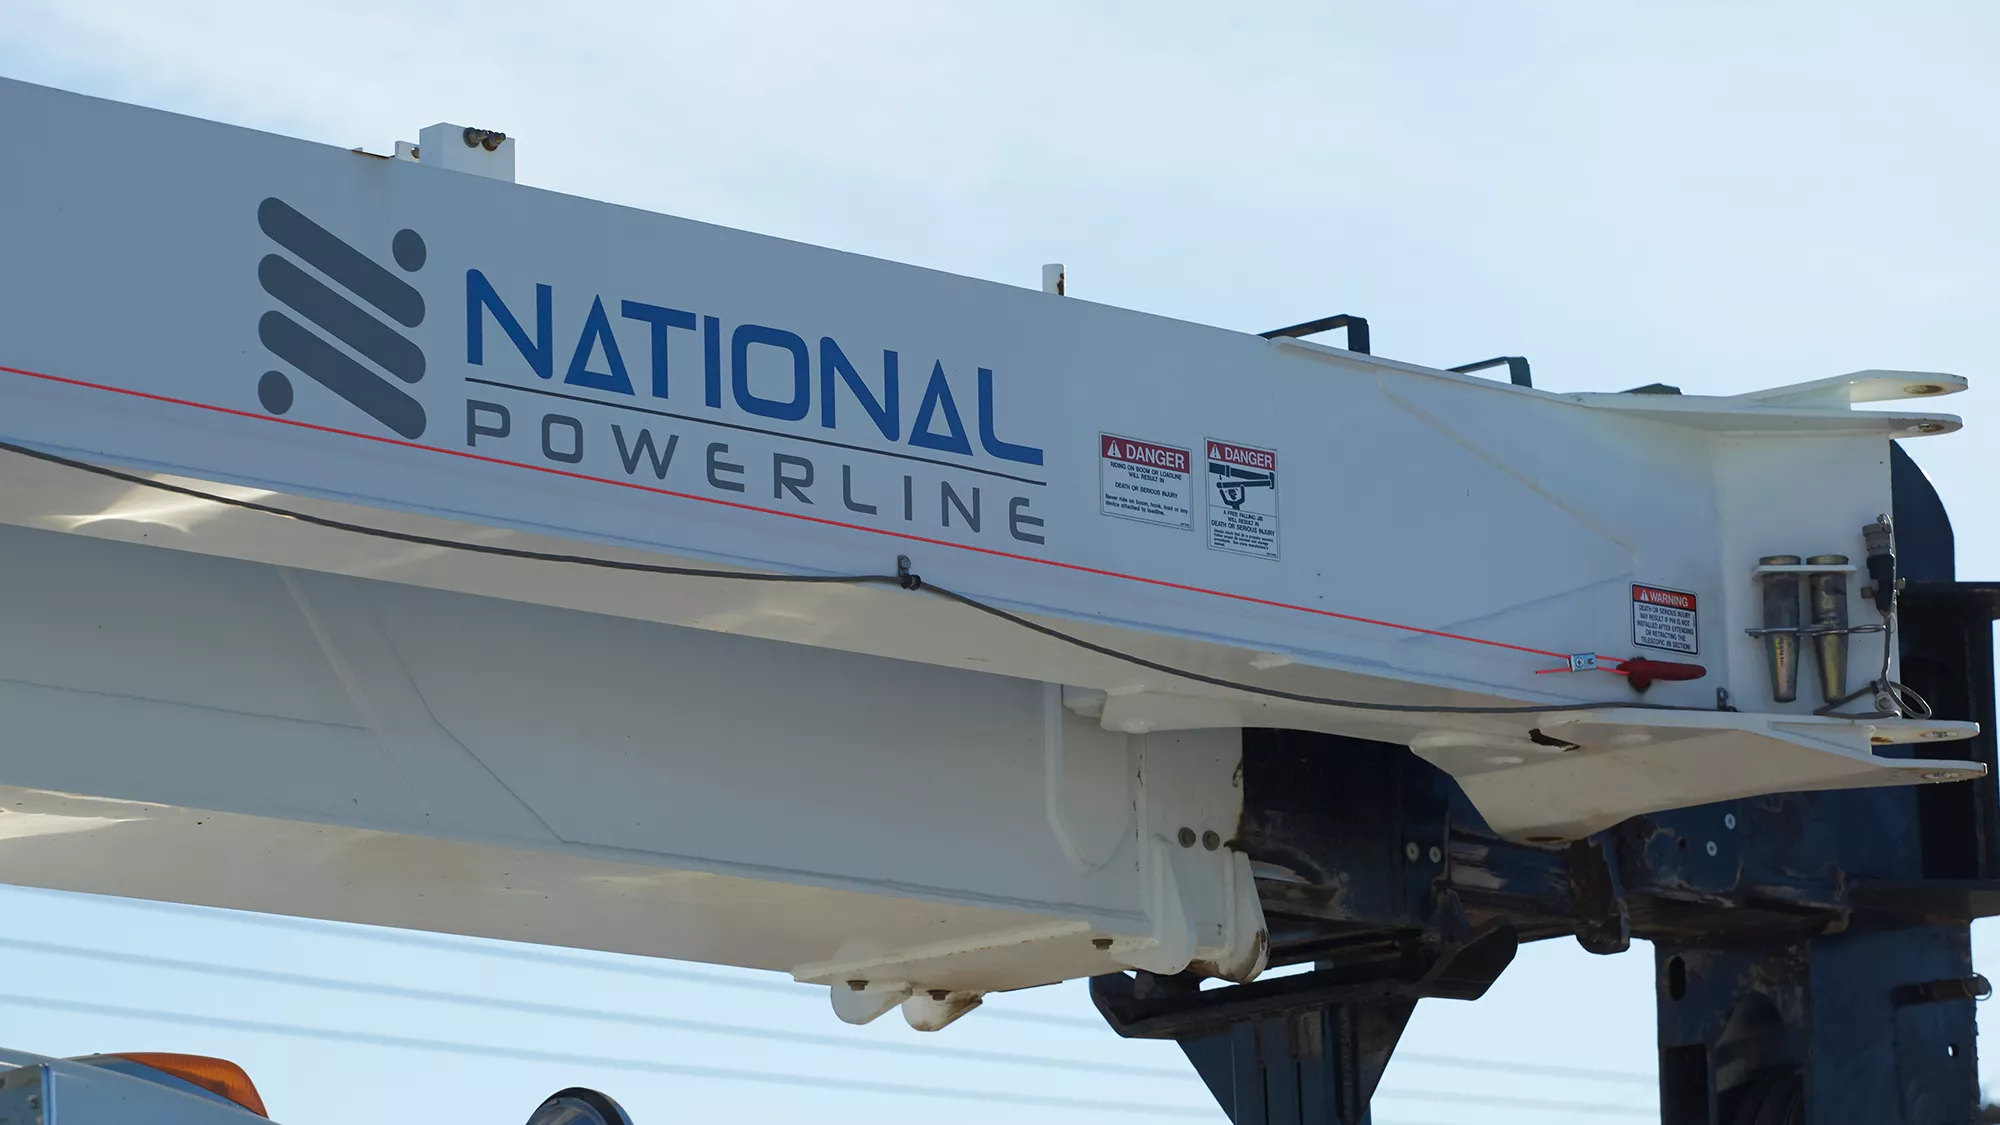 22179ccg National Powerline Crane